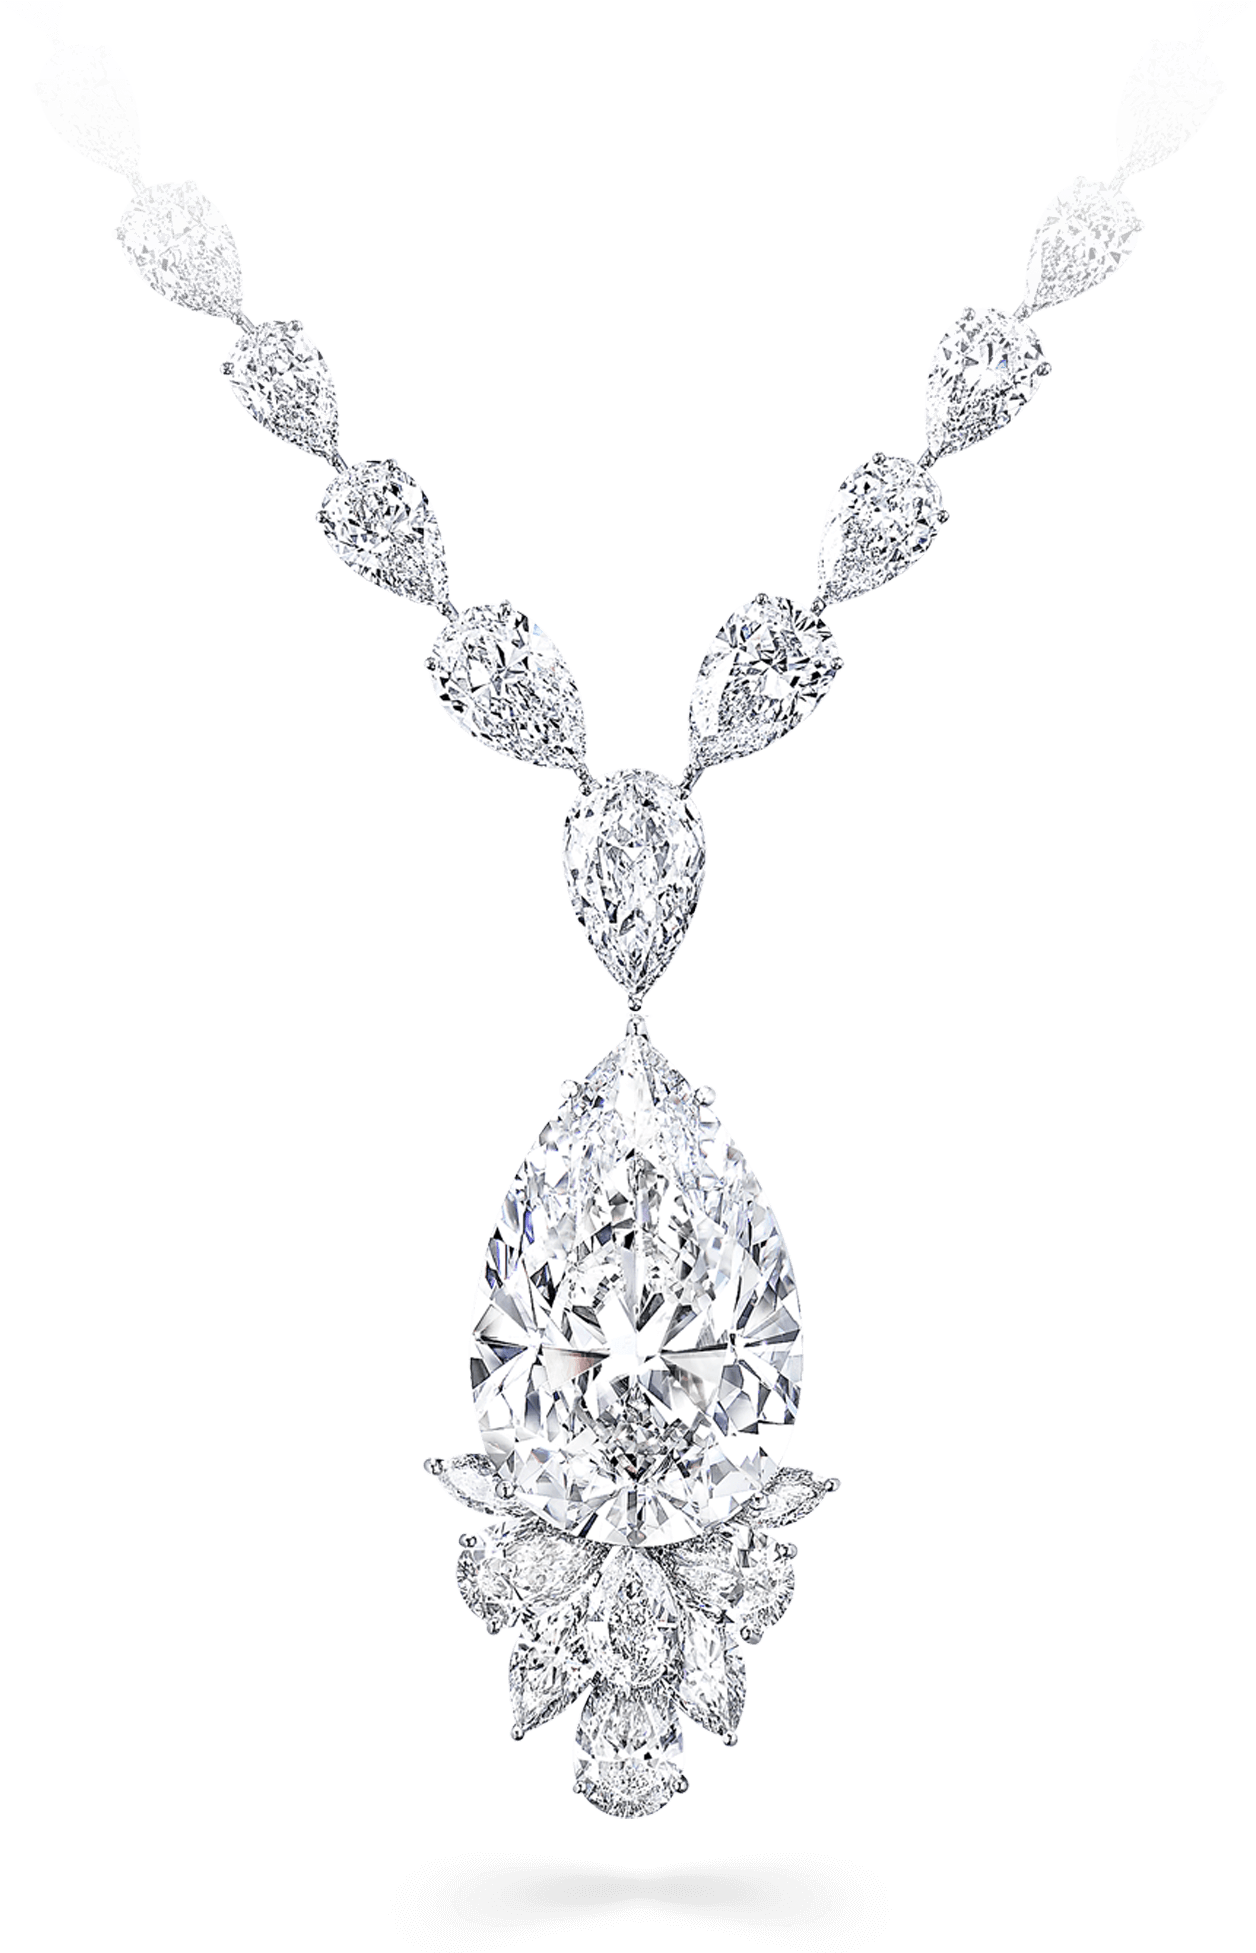 Diamond Necklace Png 1256 X 1953